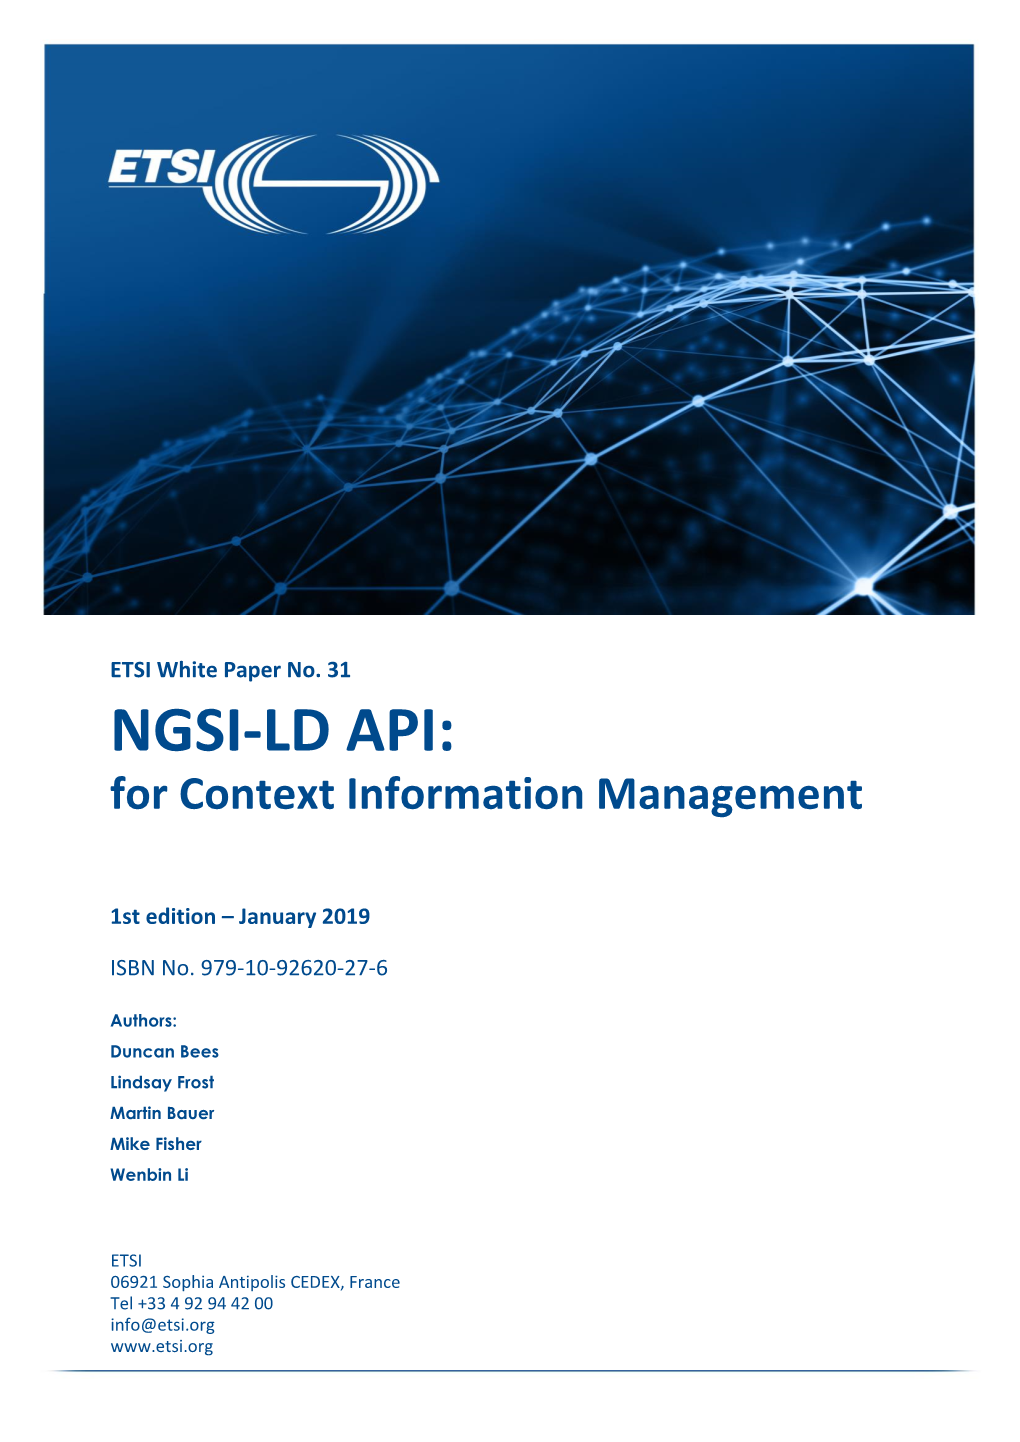 NGSI-LD API: for Context Information Management